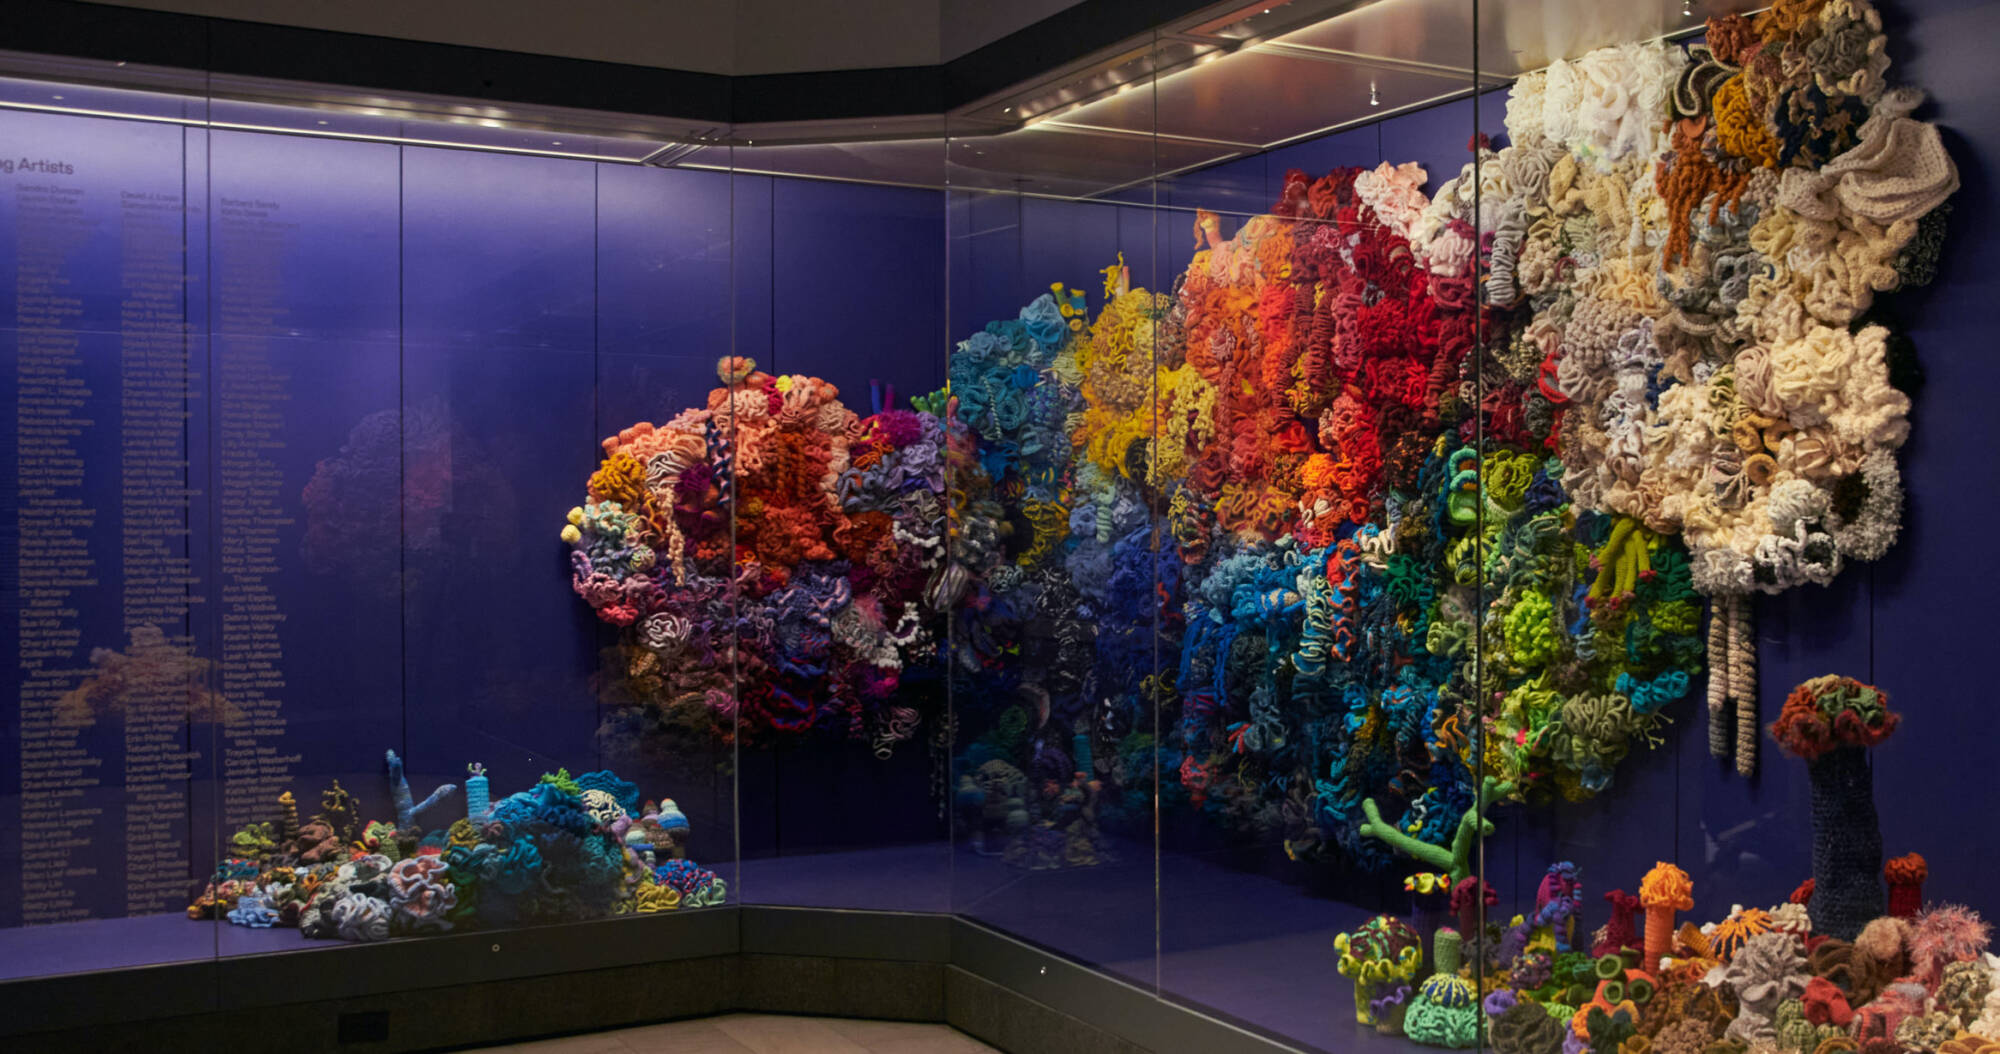 Crochet coral sculptures inside aquarium-like glass vitrine